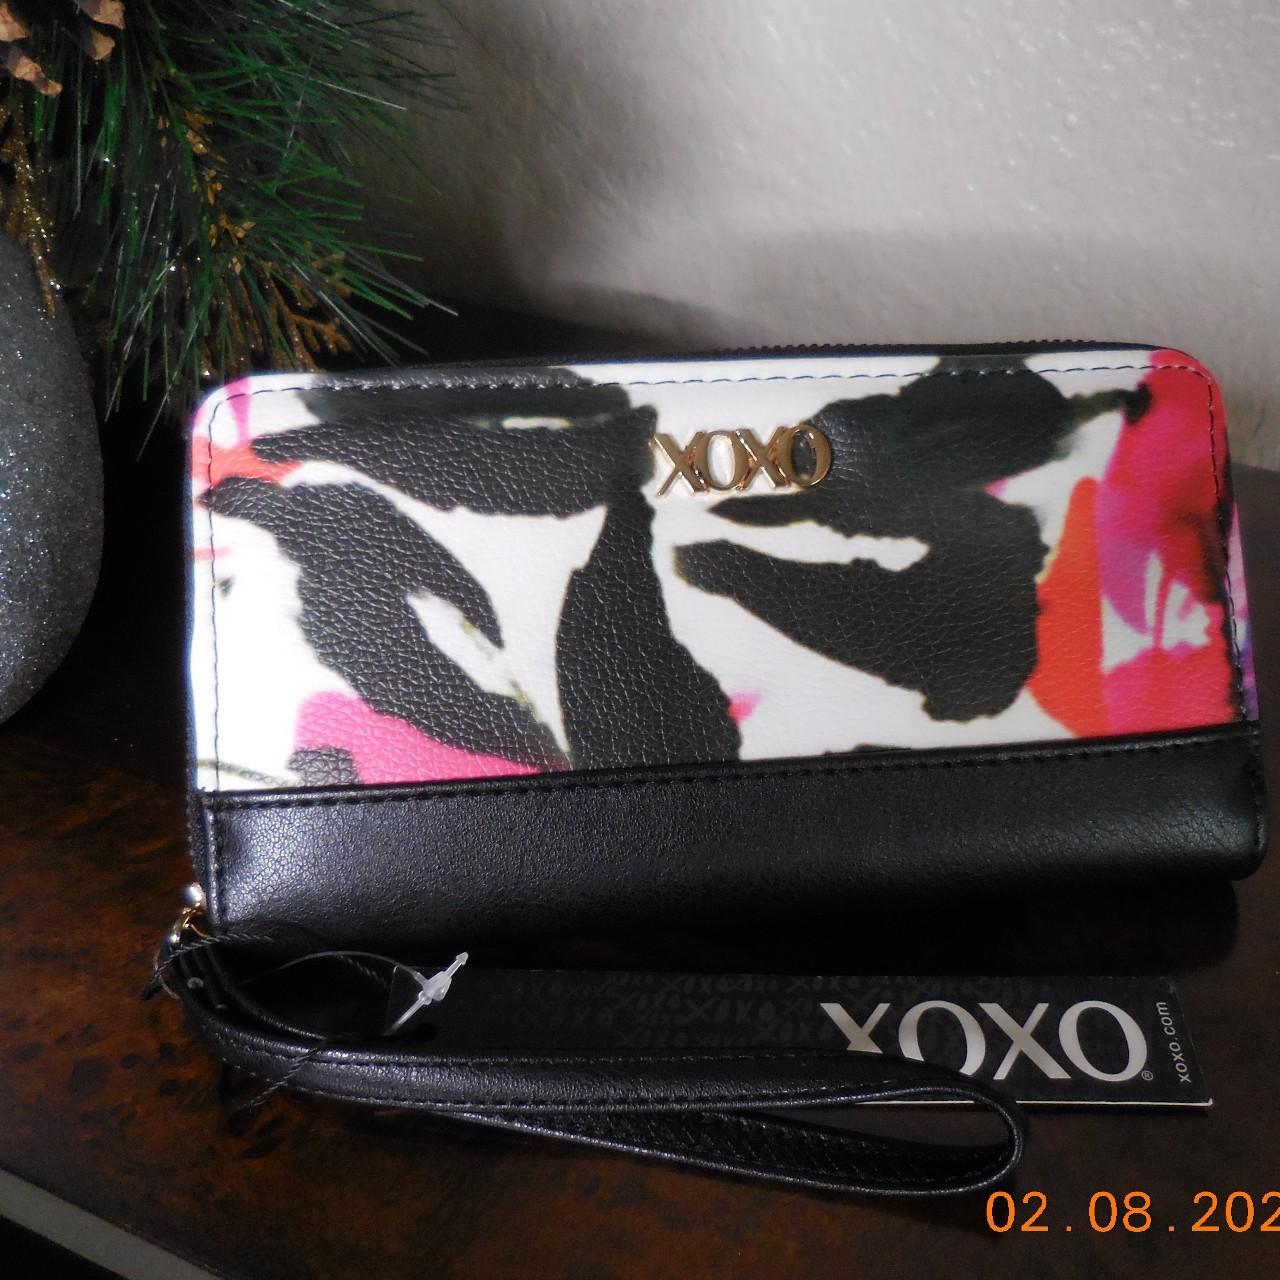 XOXO Handbags | Mercari